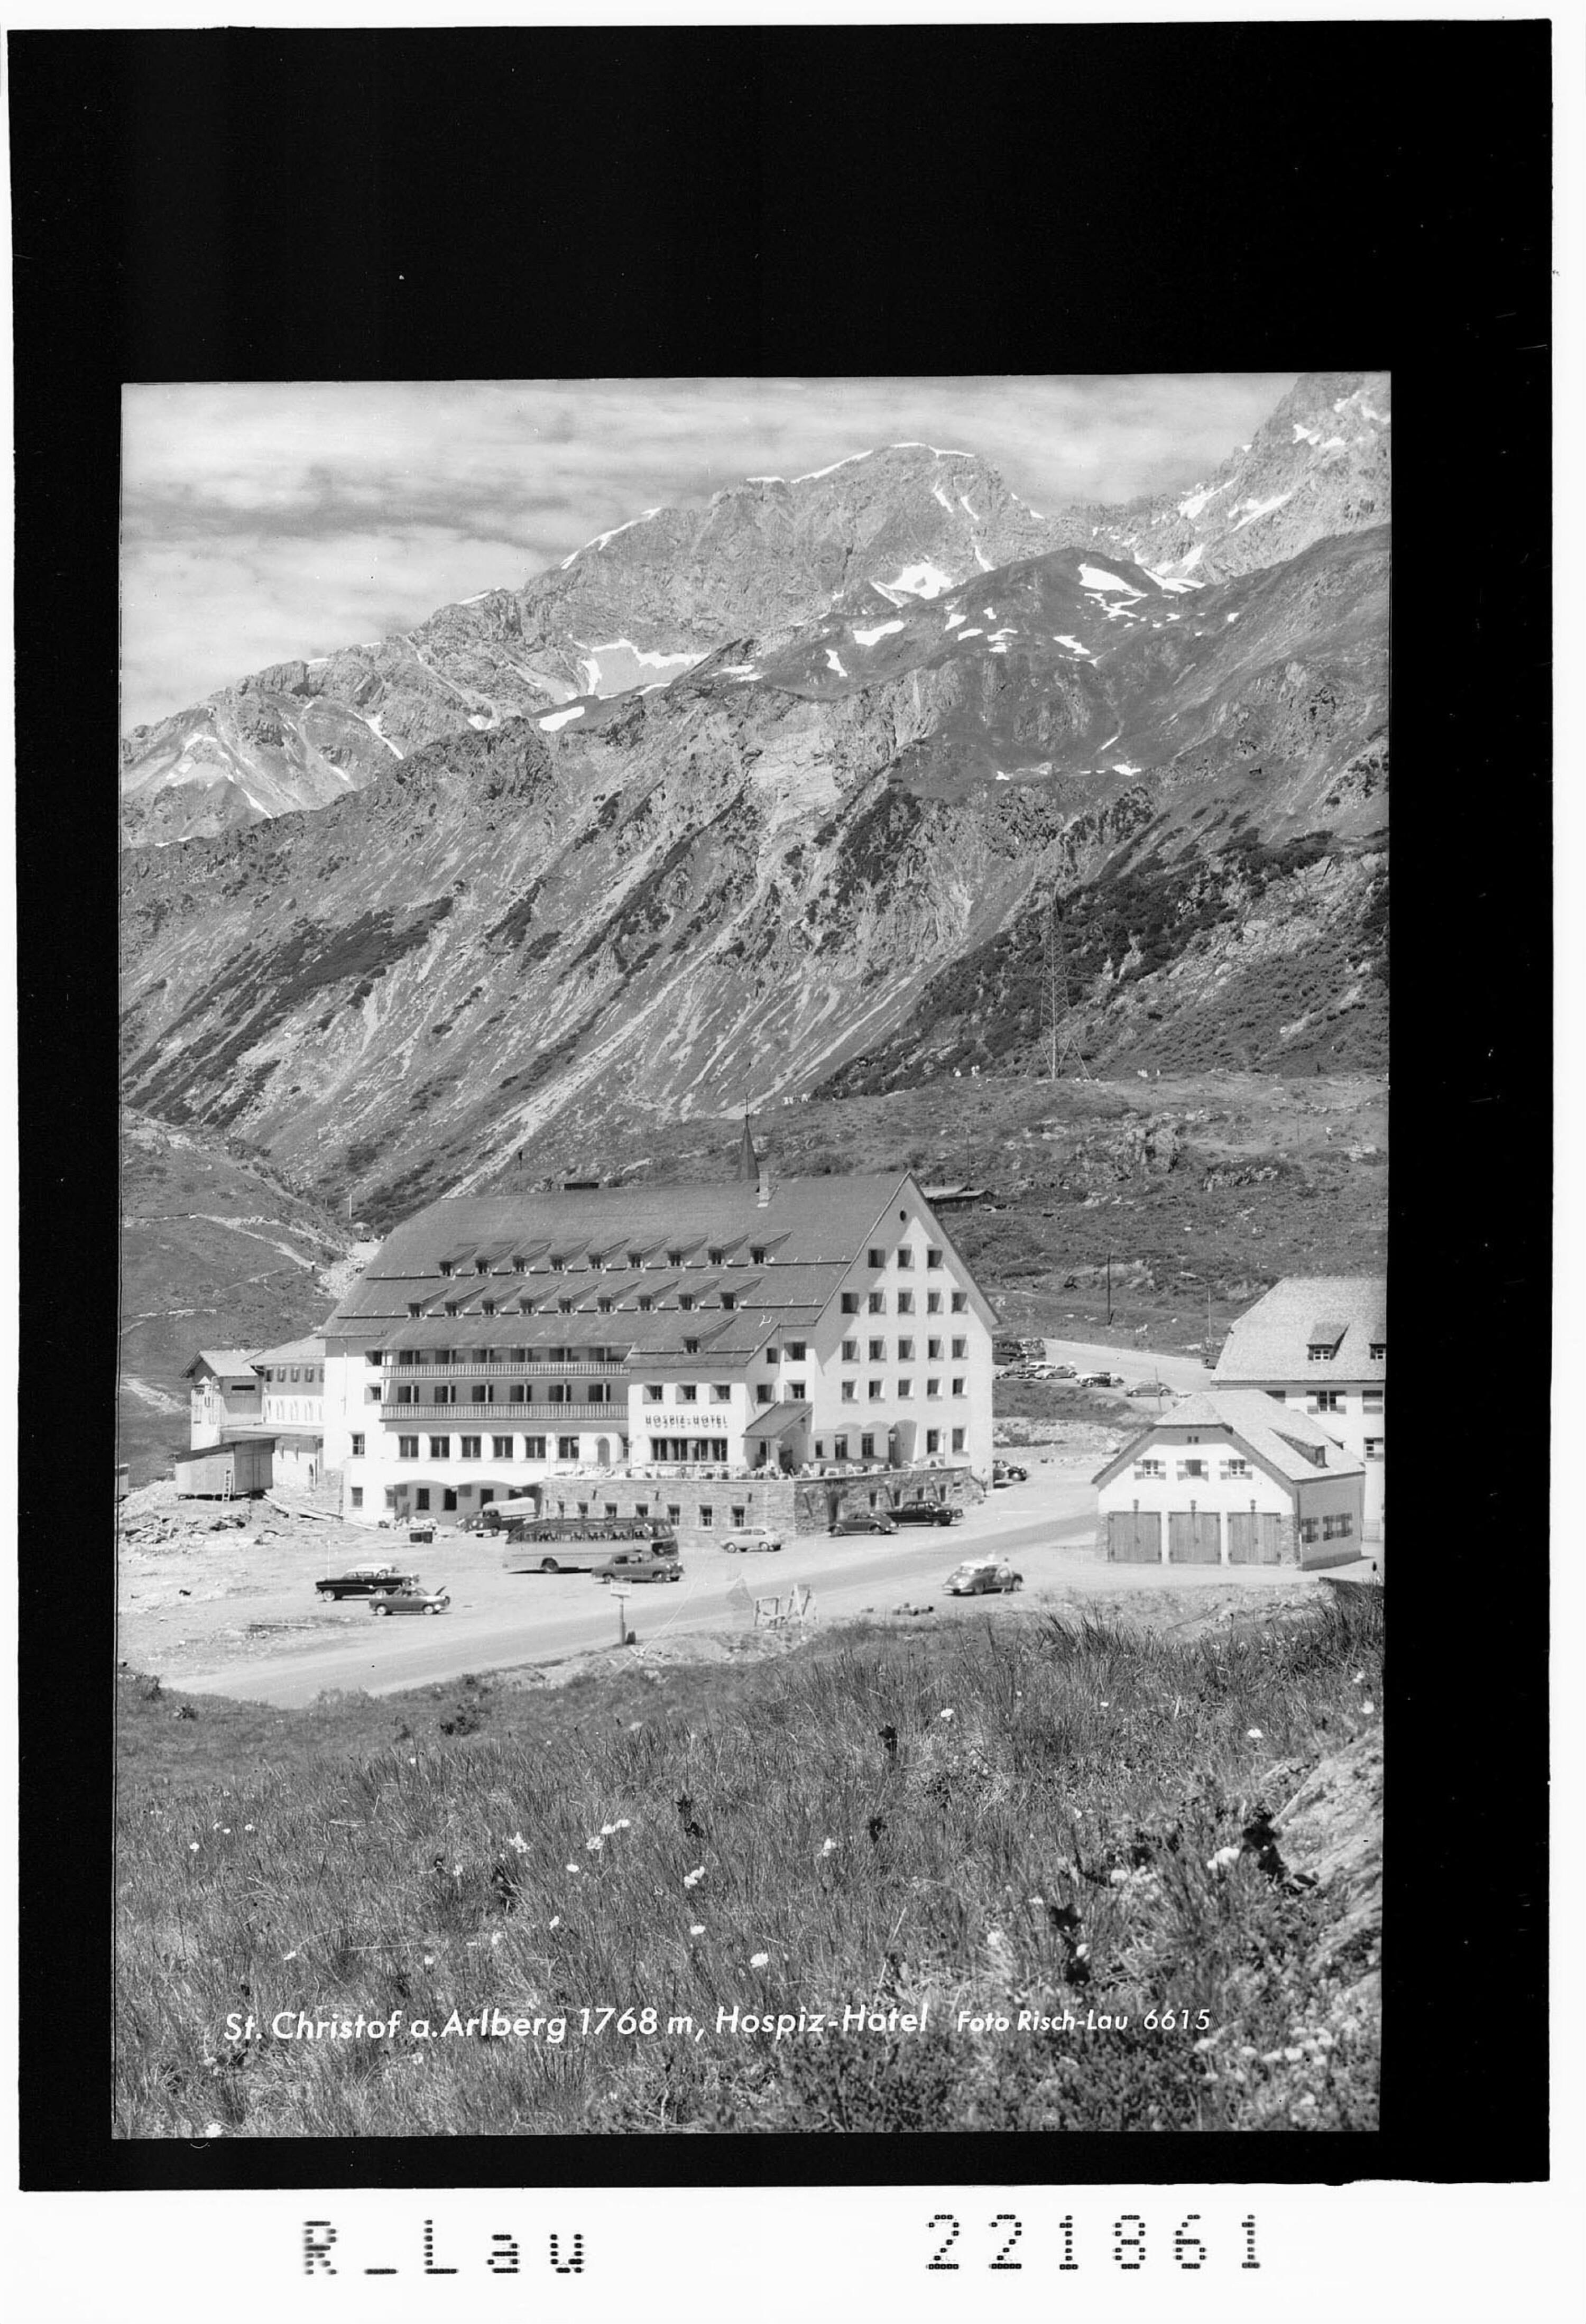 St.Christoph am Arlberg 1768 m / Hospiz Hotel></div>


    <hr>
    <div class=